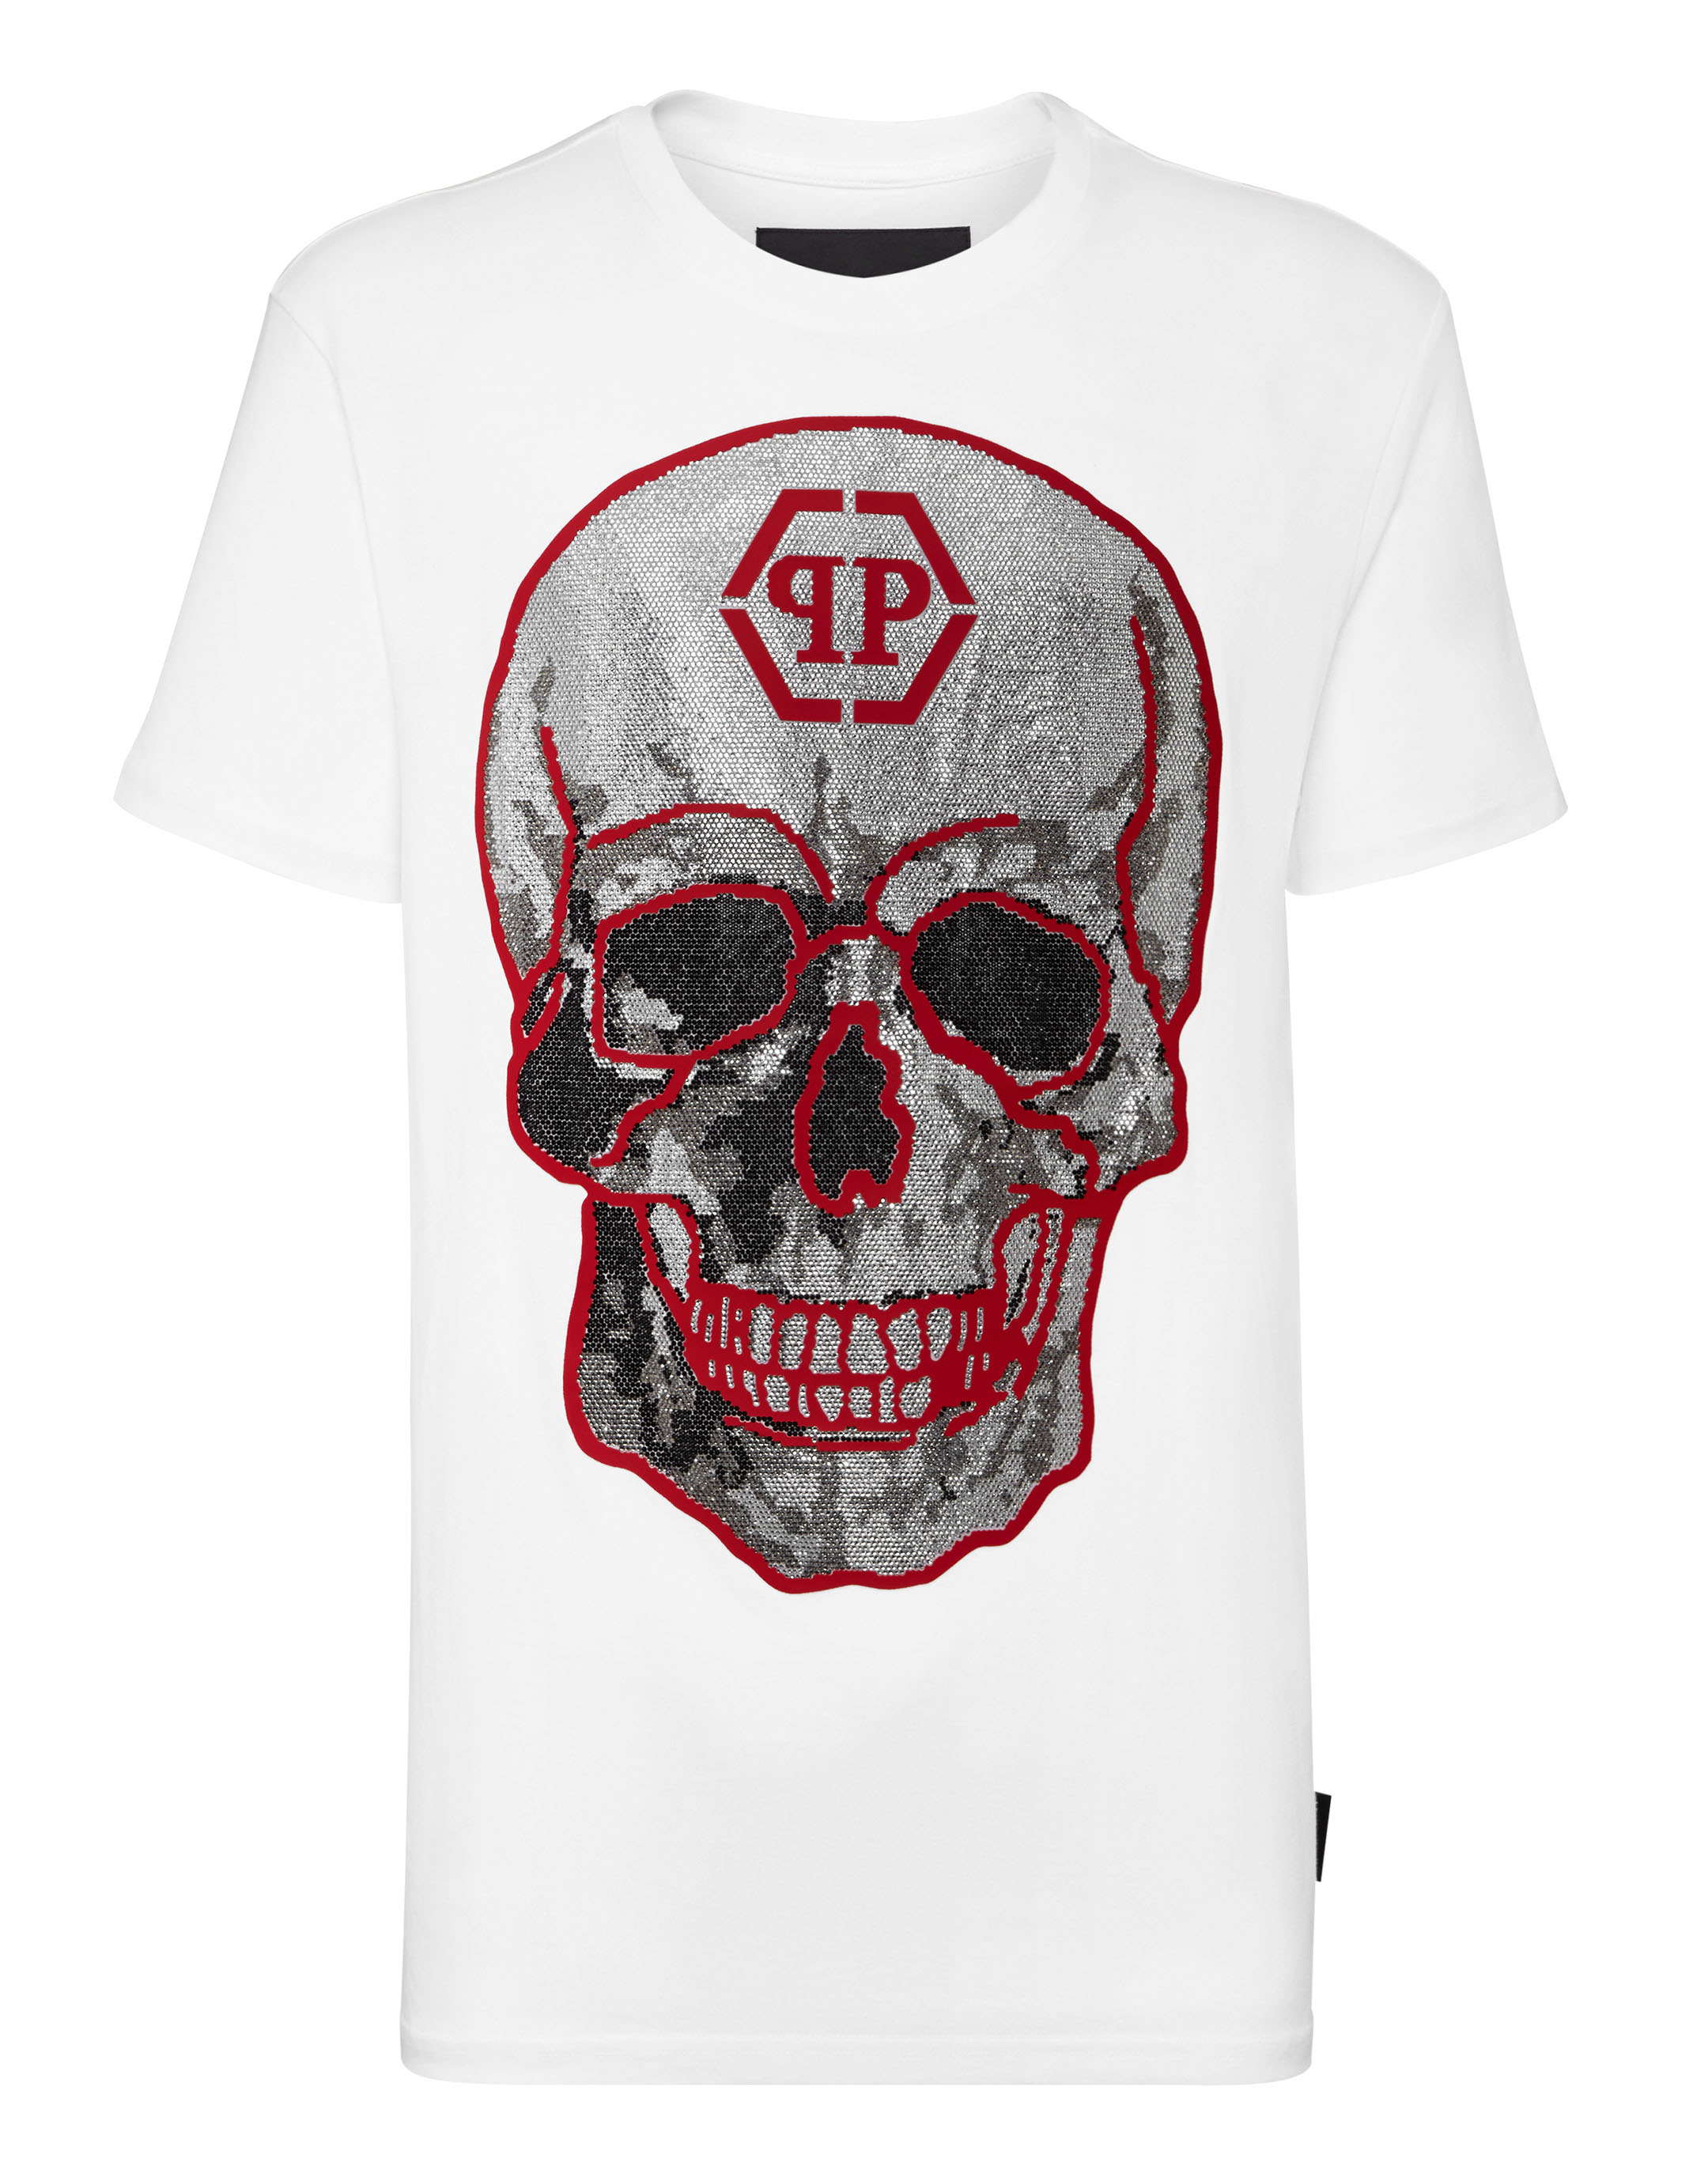 plein skull t shirt